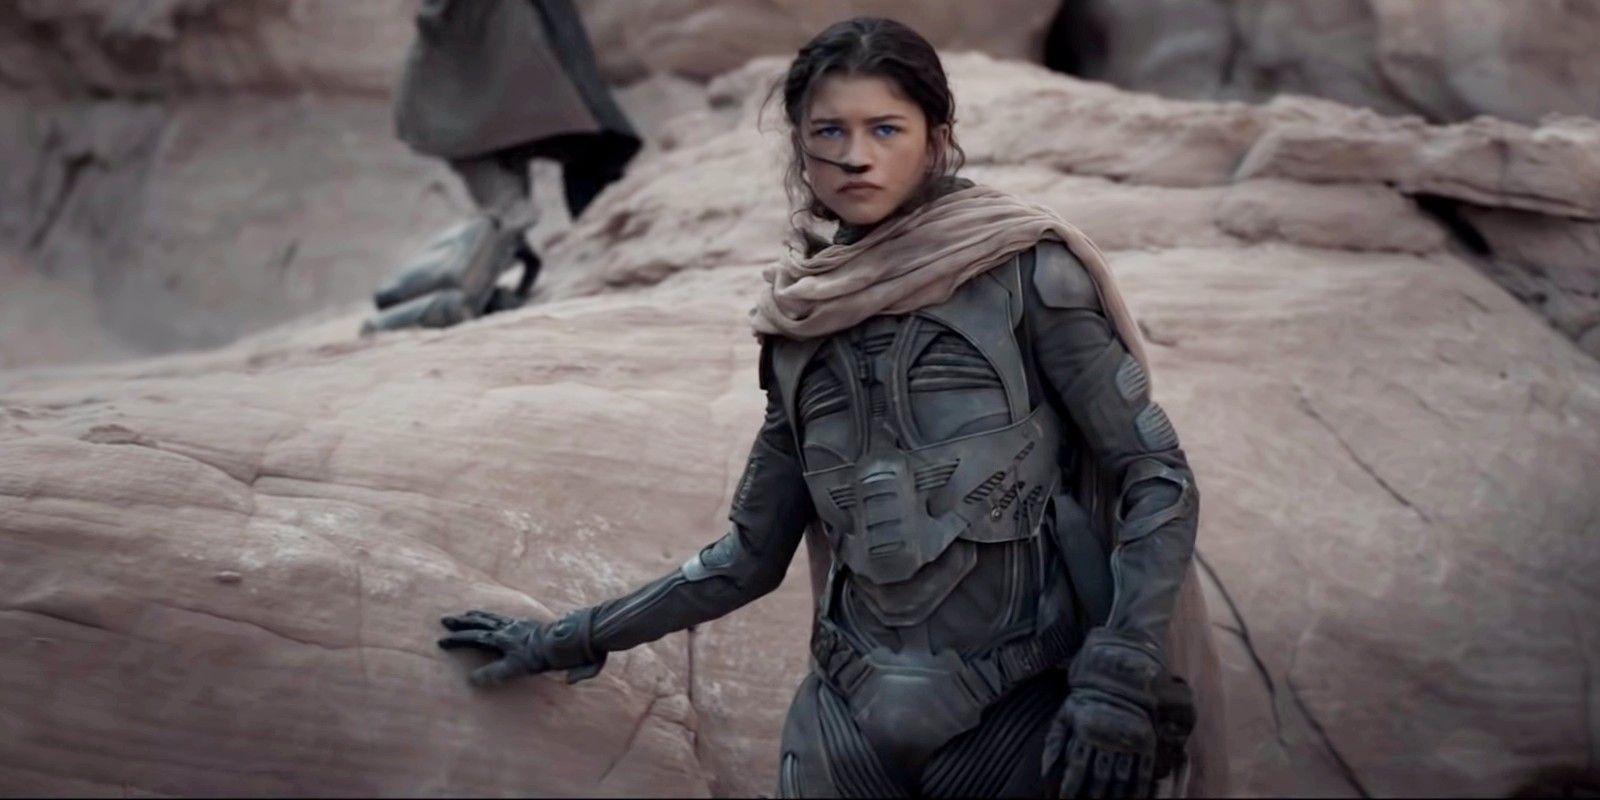 Zendaya shares snap of Arrakis from Dune set in UAE desert